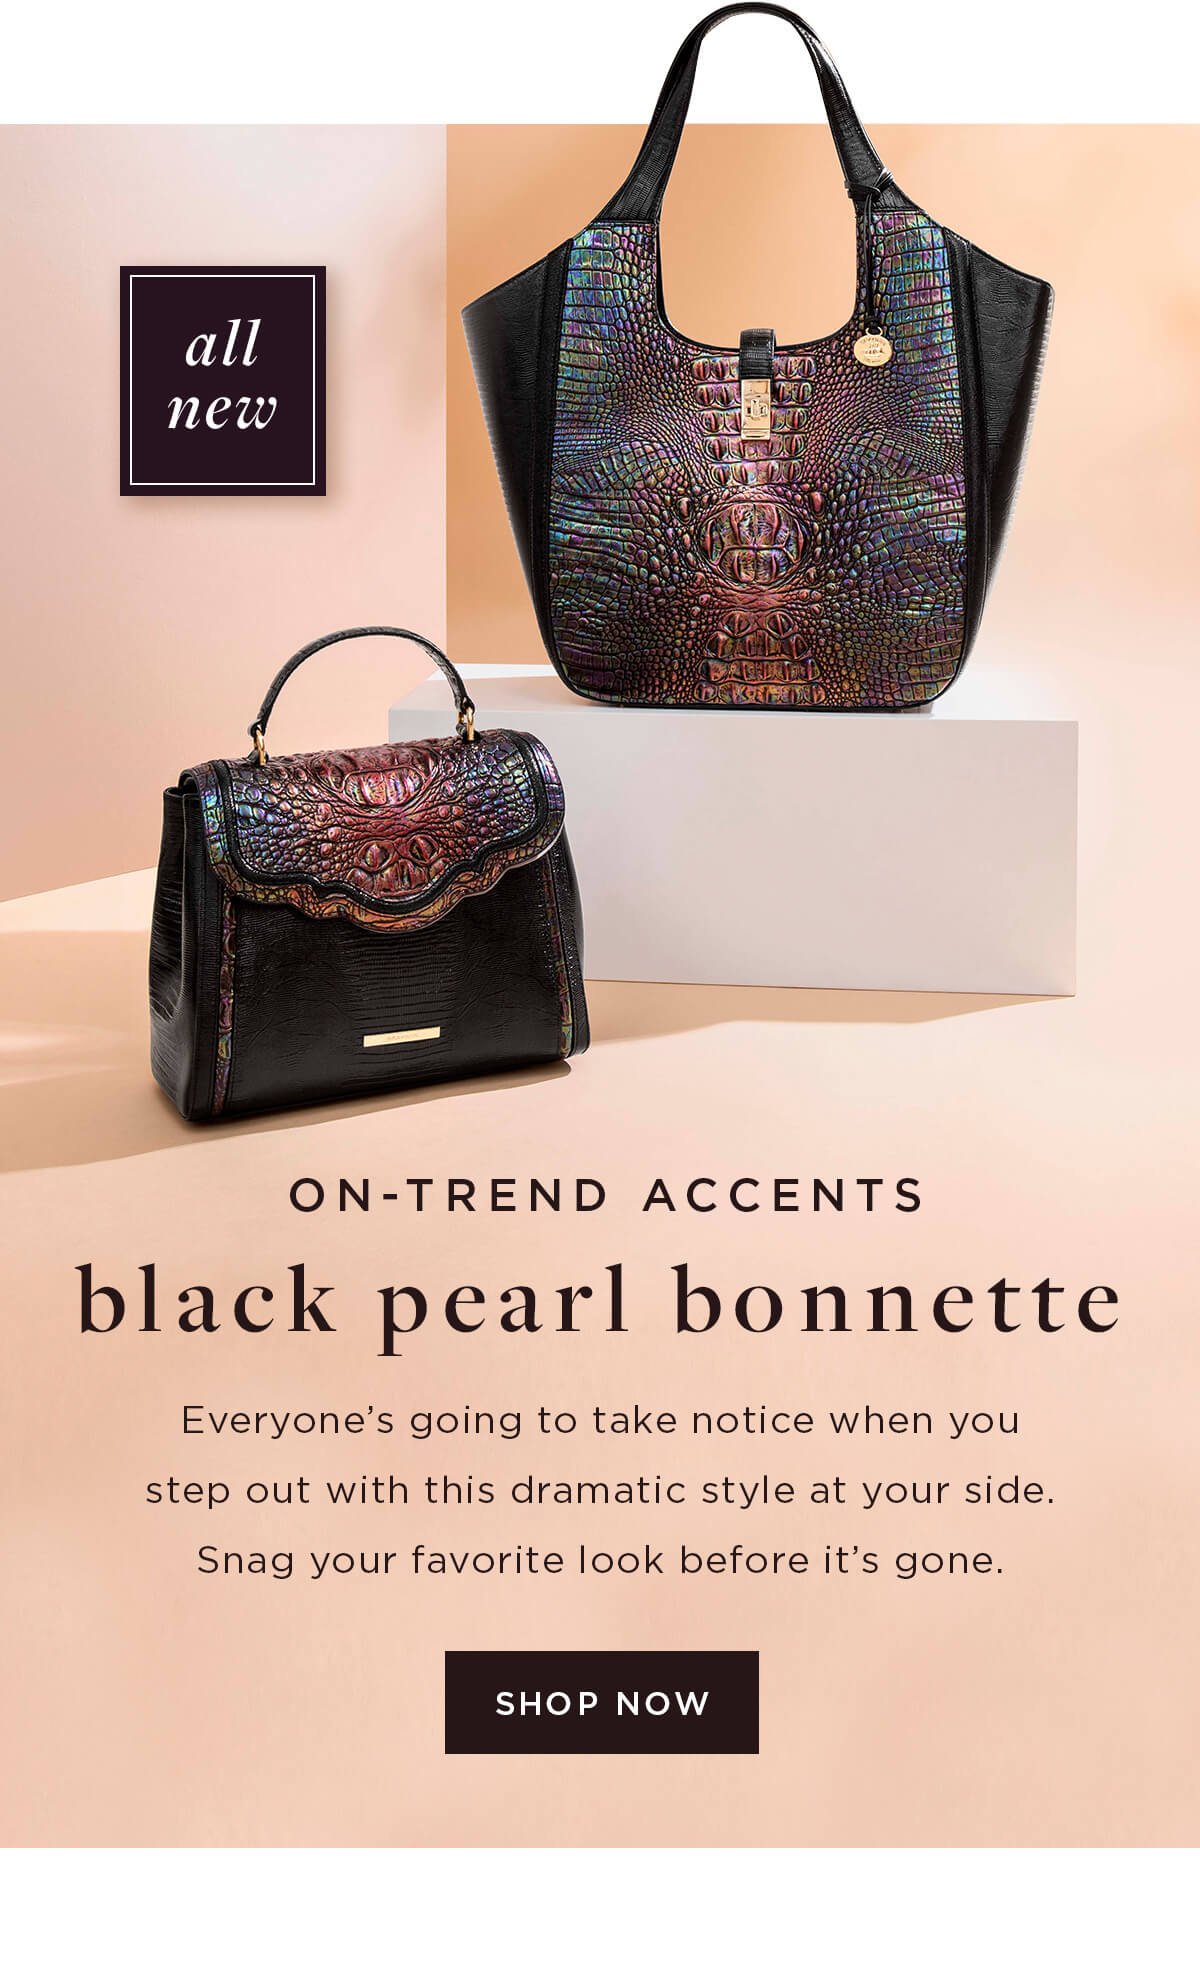 Brahmin Handbags: Meet Black Pearl Bonnette